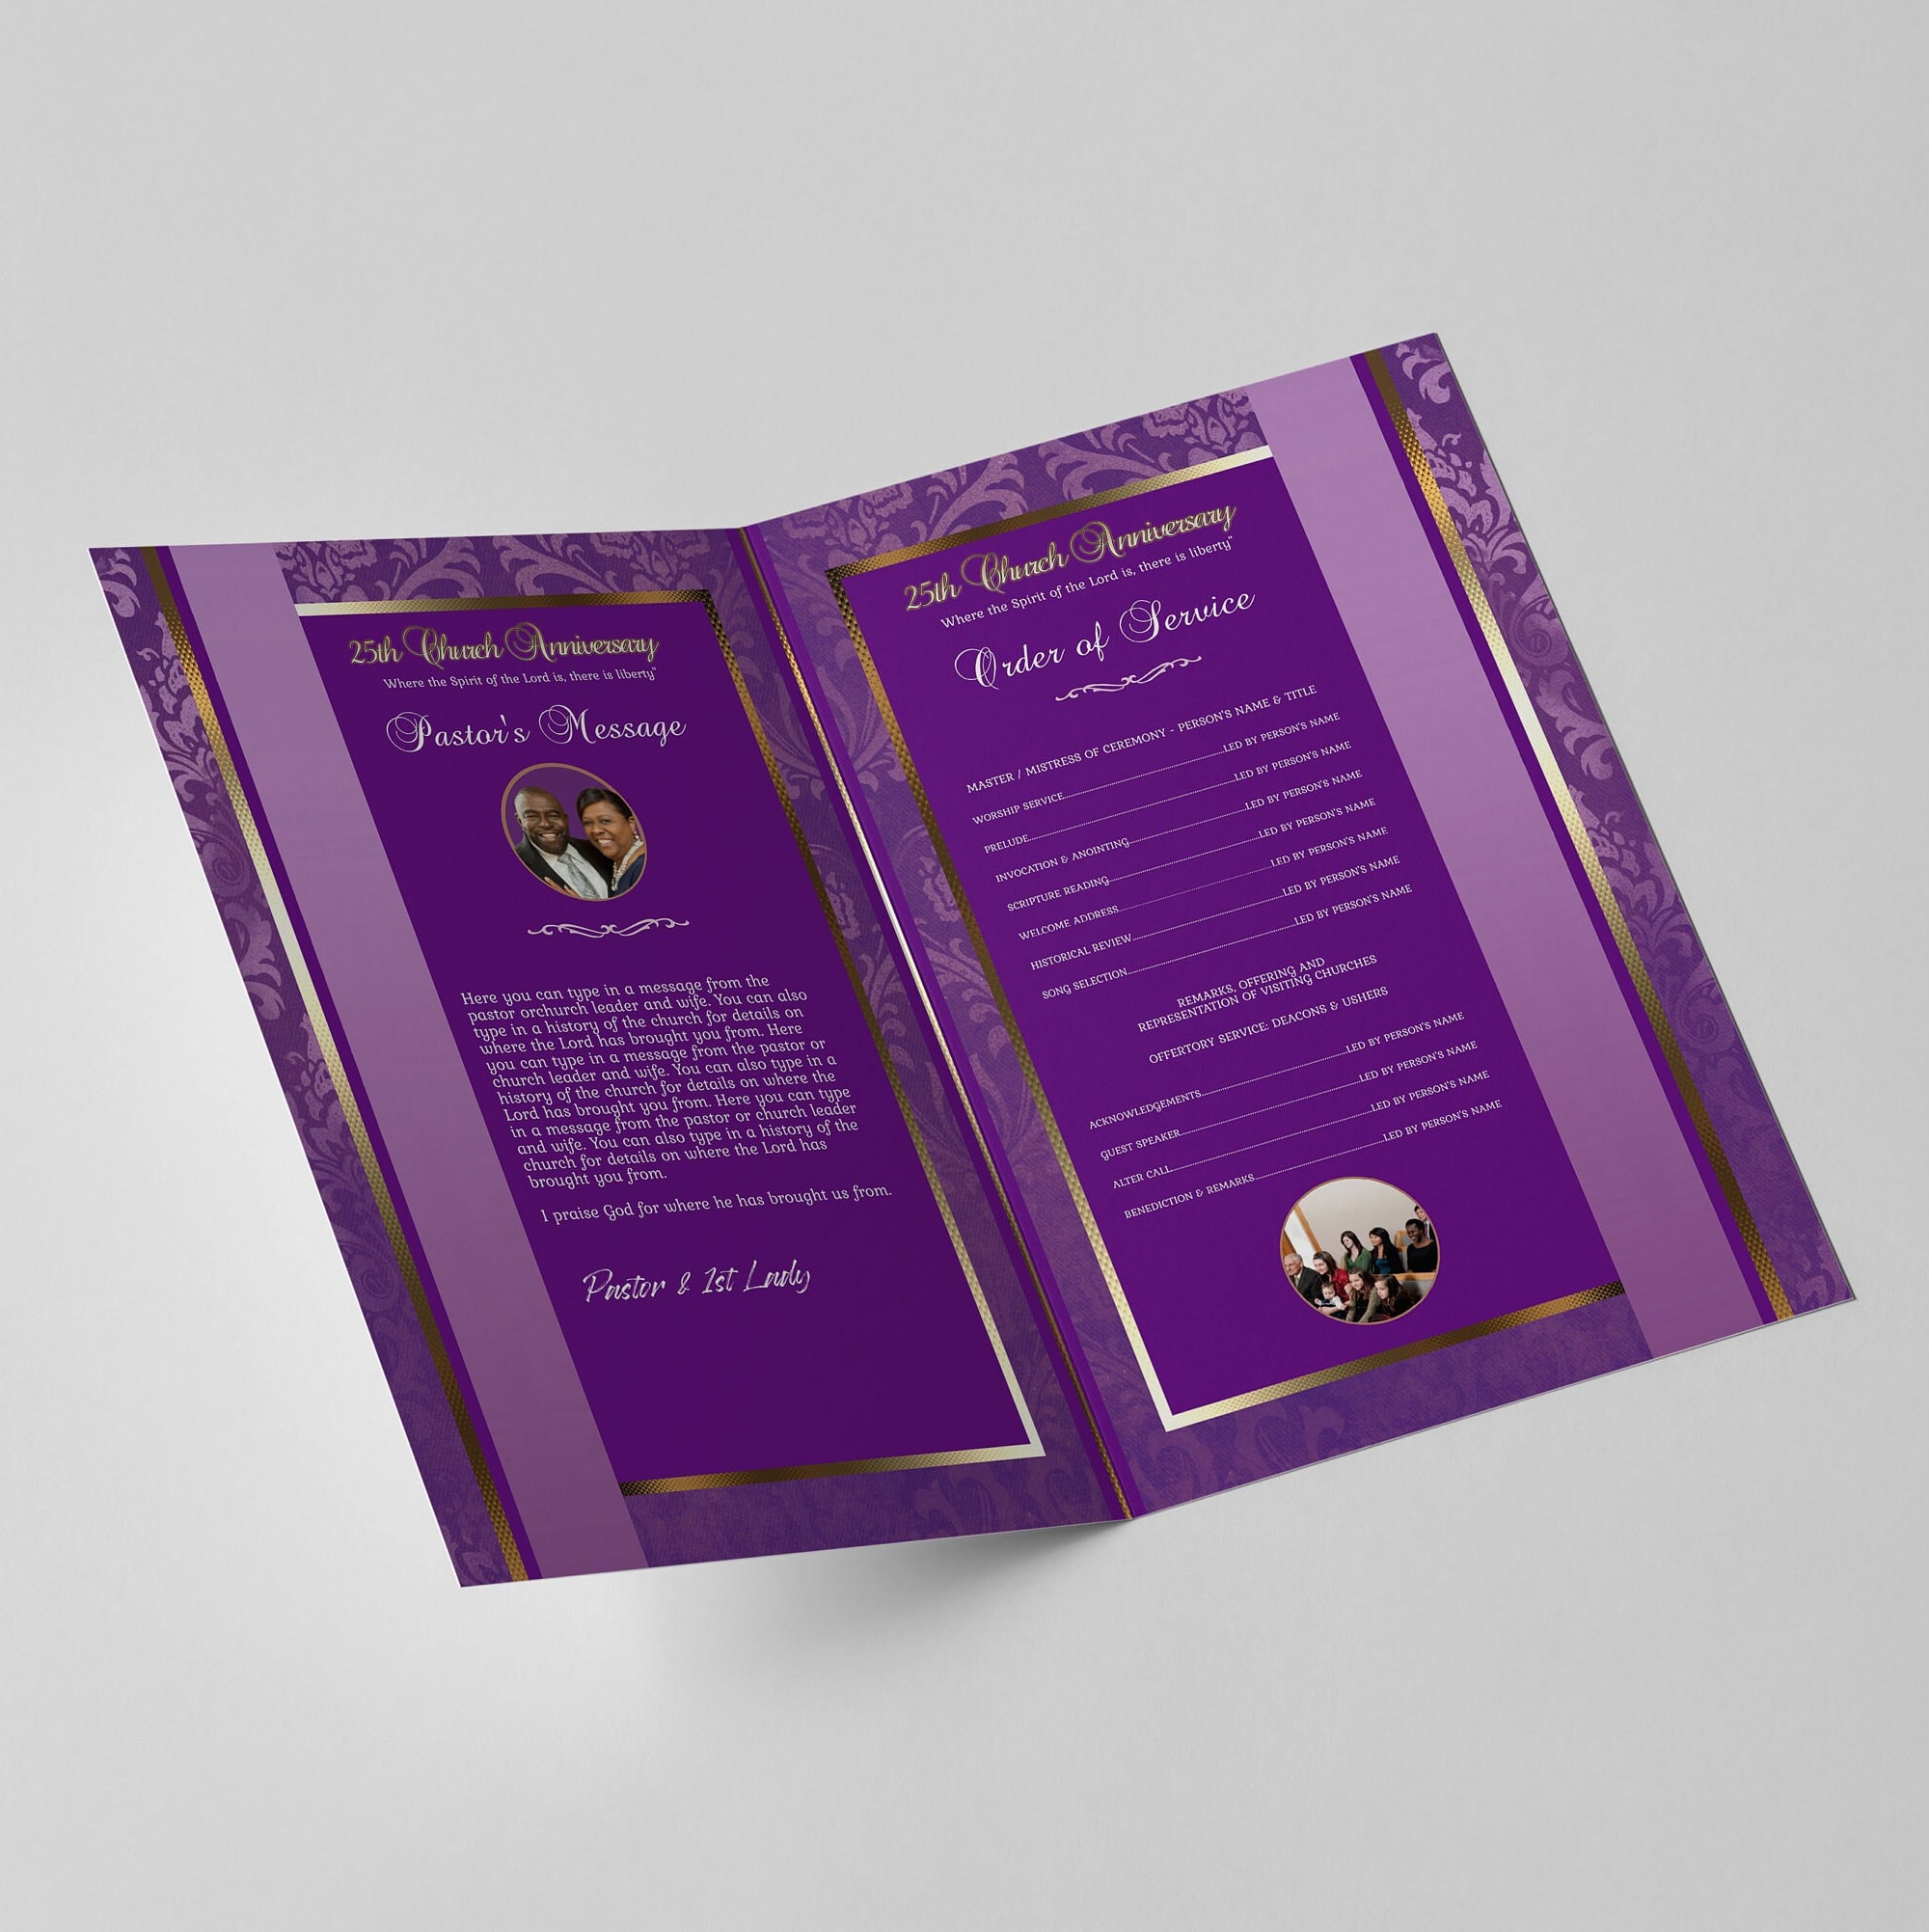 Church Anniversary Program Template Editable Brochure in pic